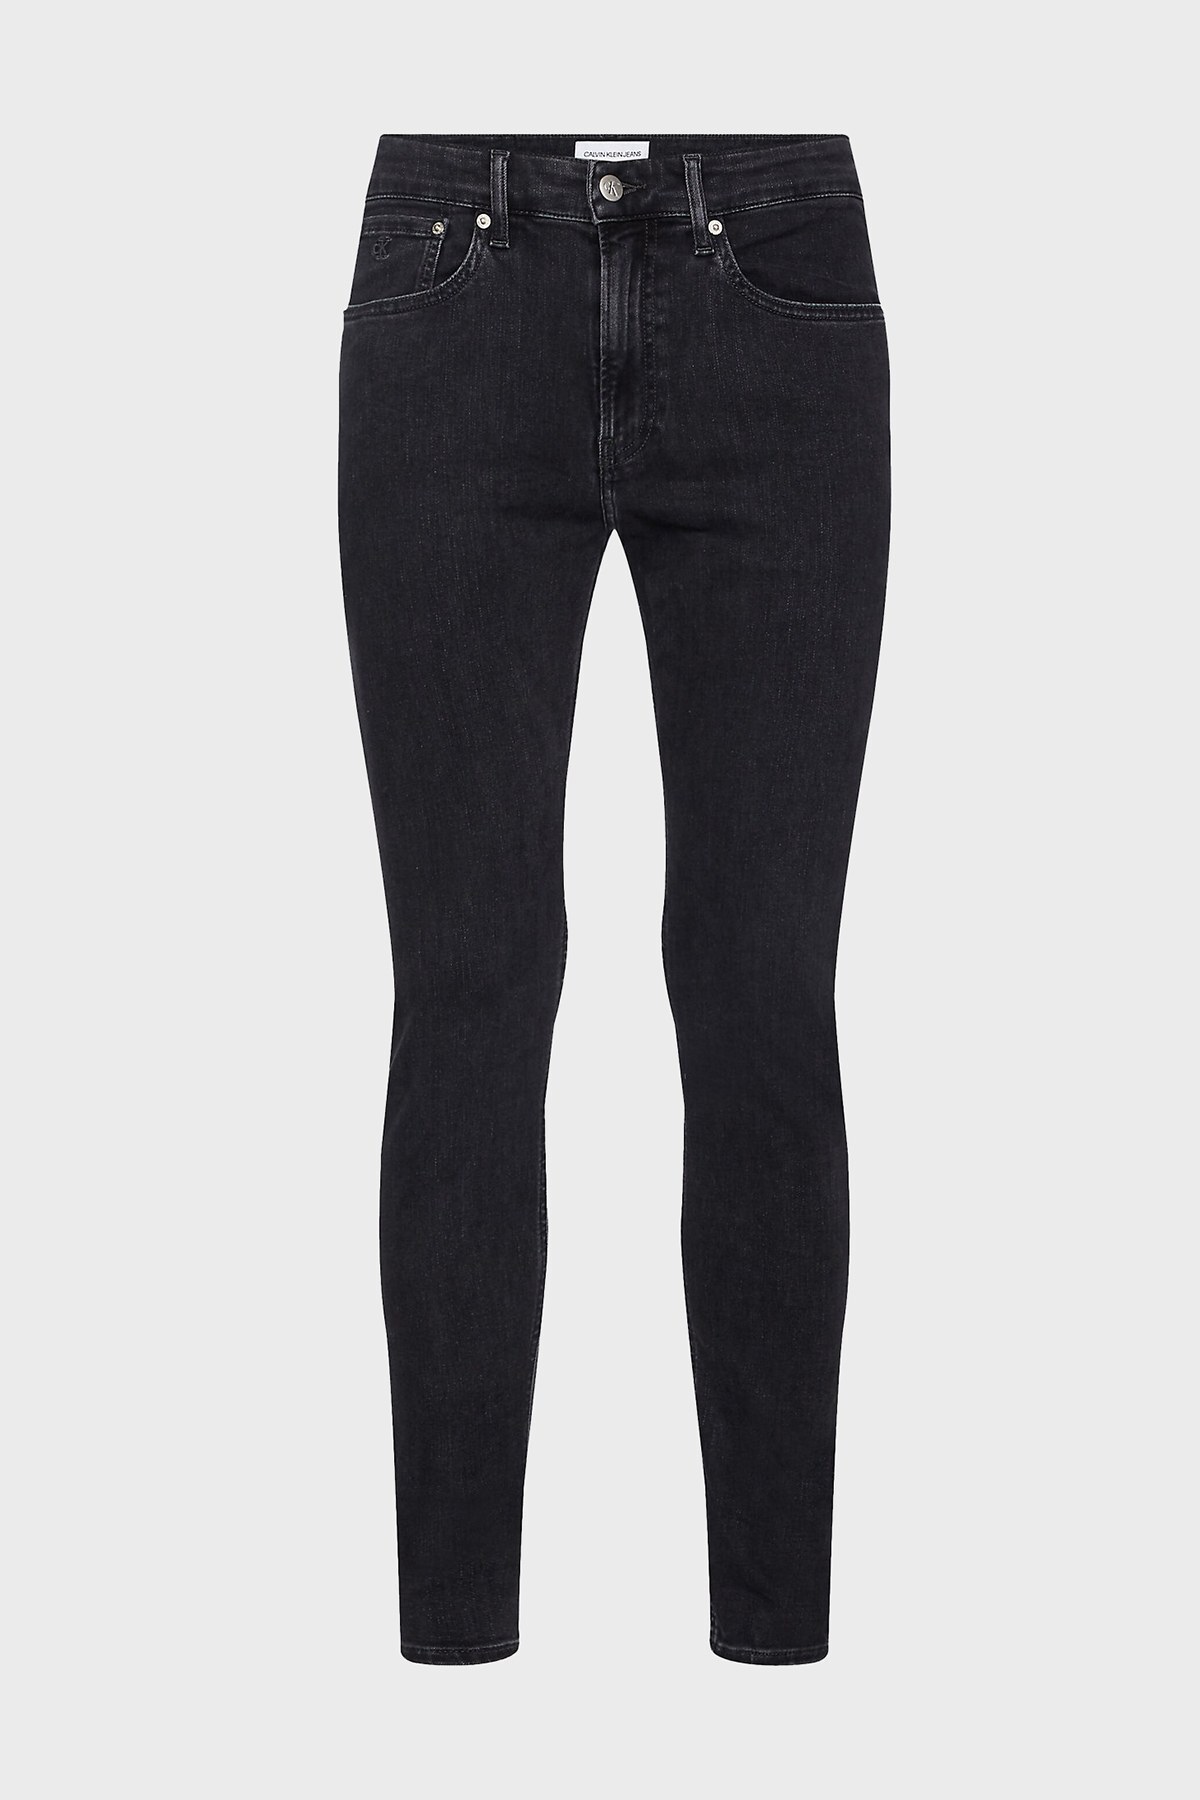 Calvin Klein Pamuklu Düşük Bel Skinny Fit Dar Paça Jeans Erkek Kot Pantolon J30J315571 1BZ GRİ